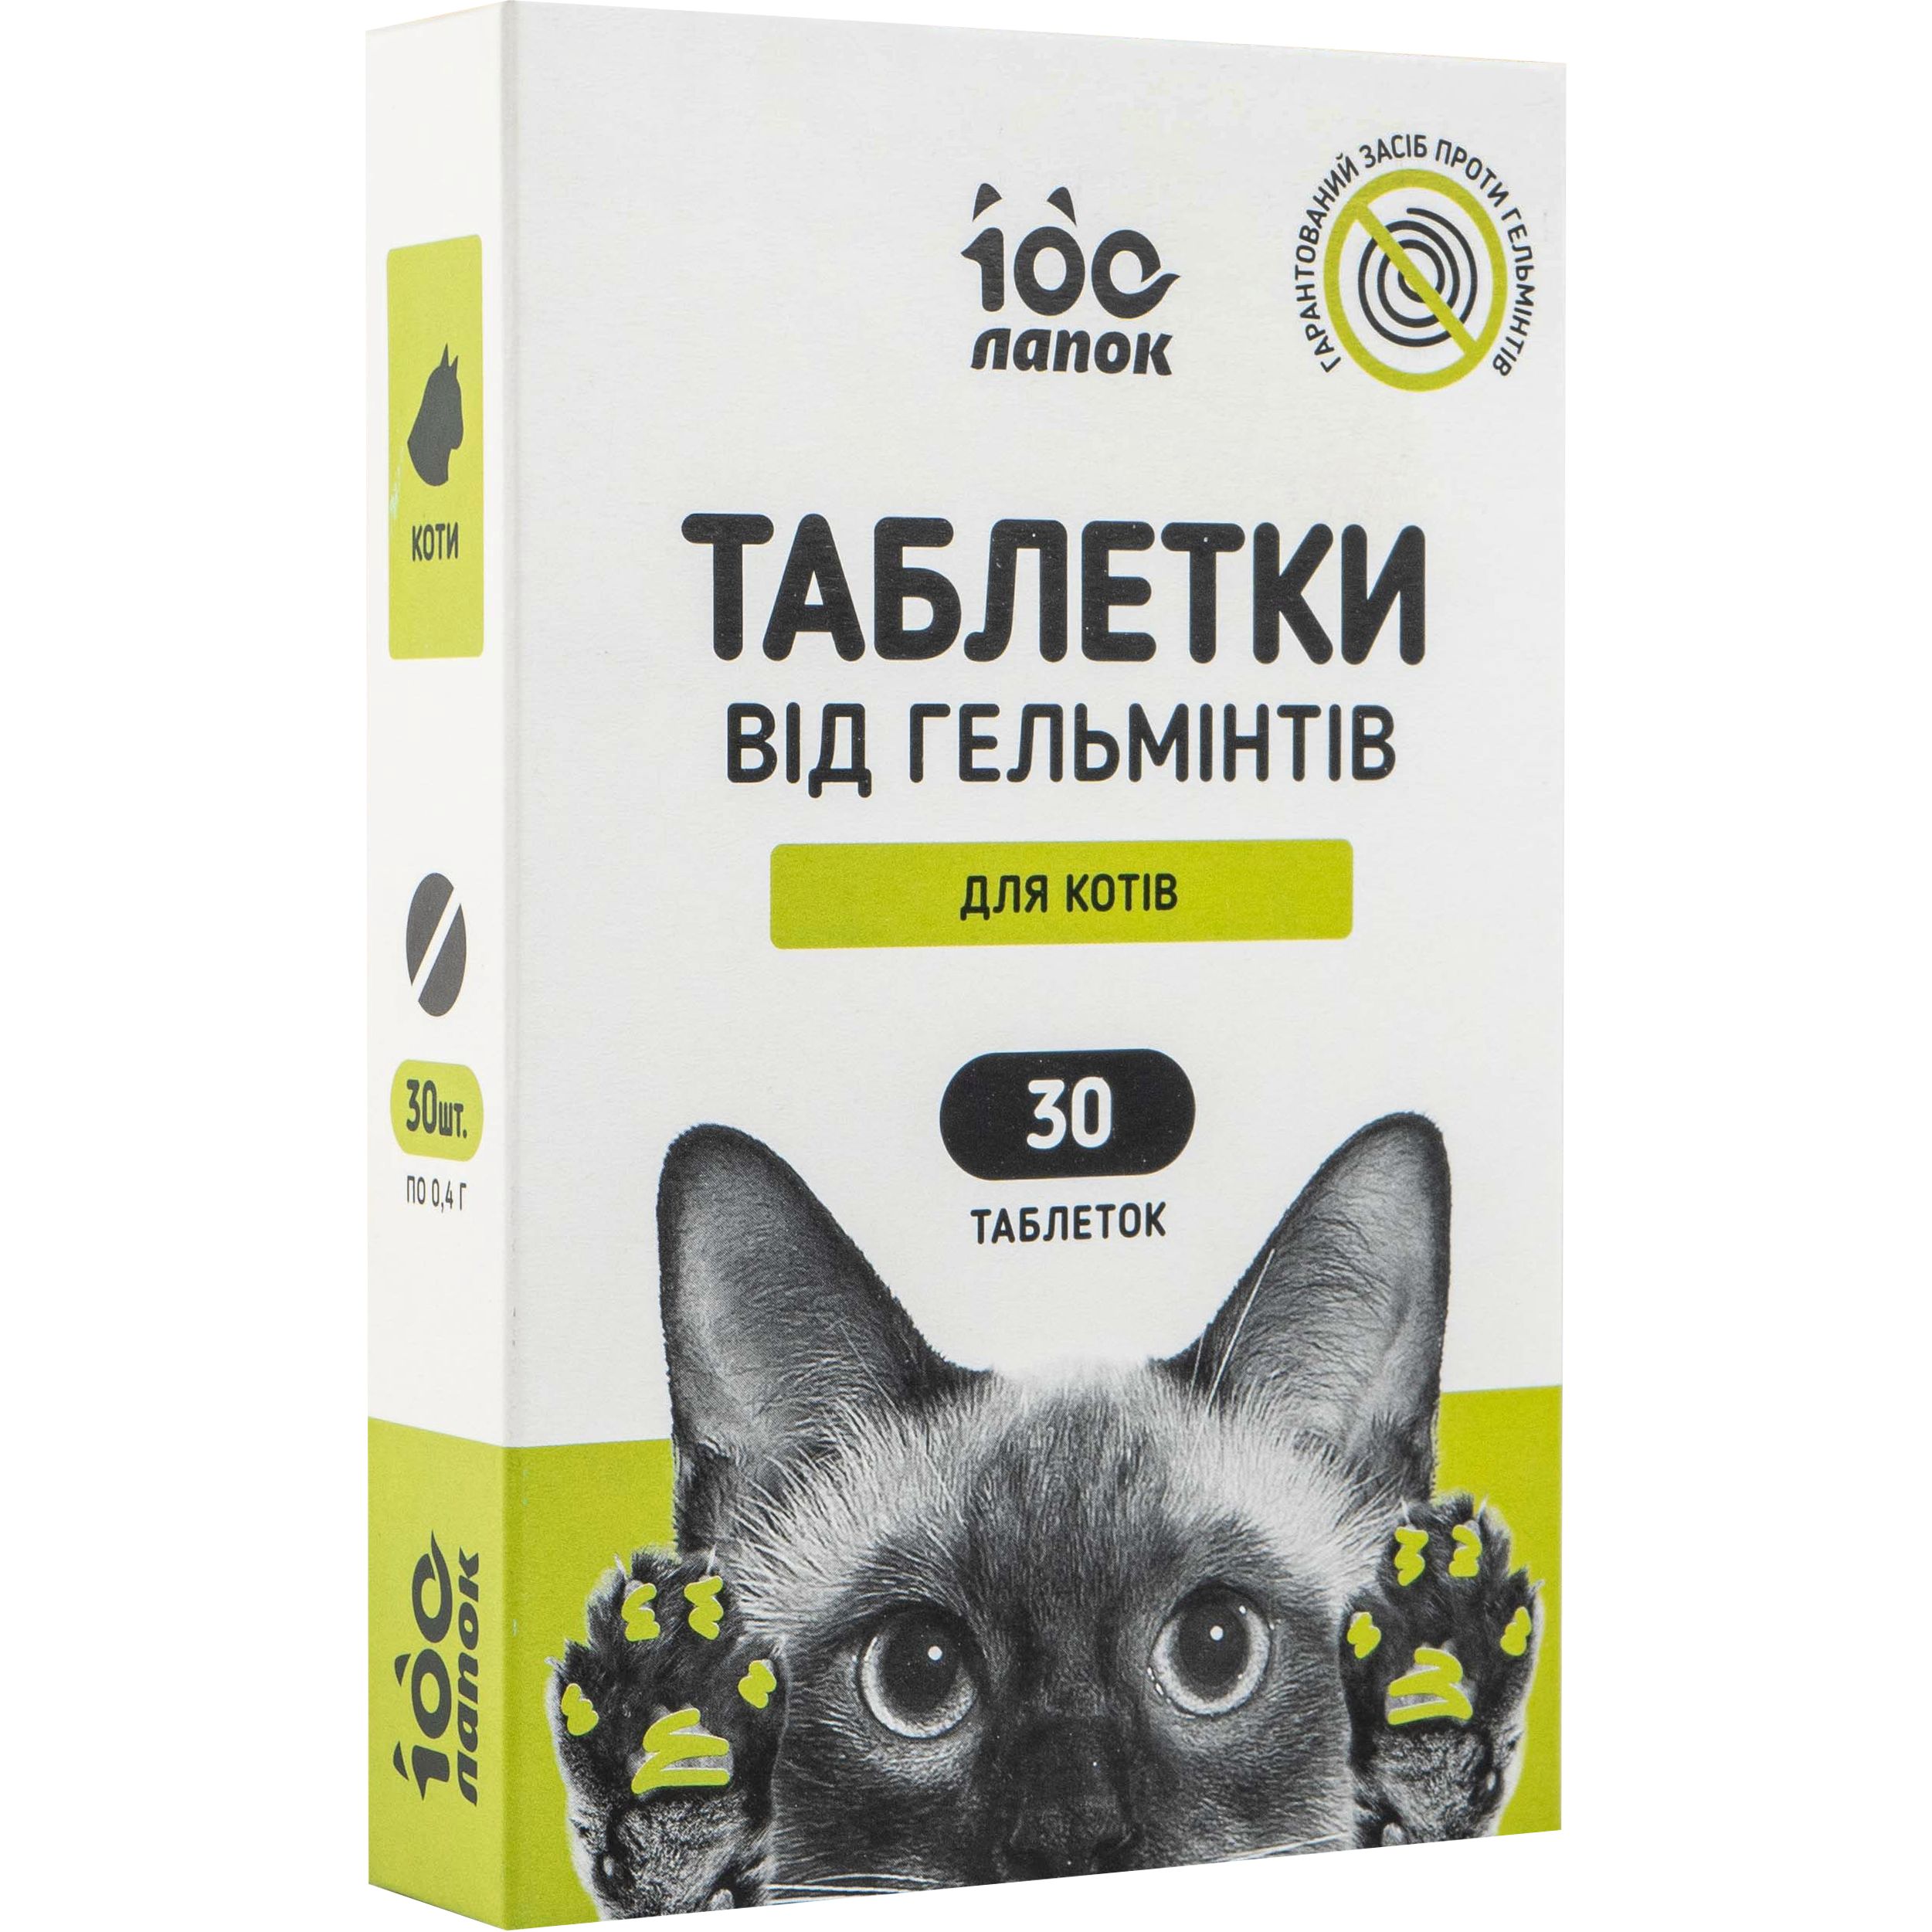 Антигельминтные таблетки Vitomax 100 Лапок для кошек, 30 таблеток - фото 1